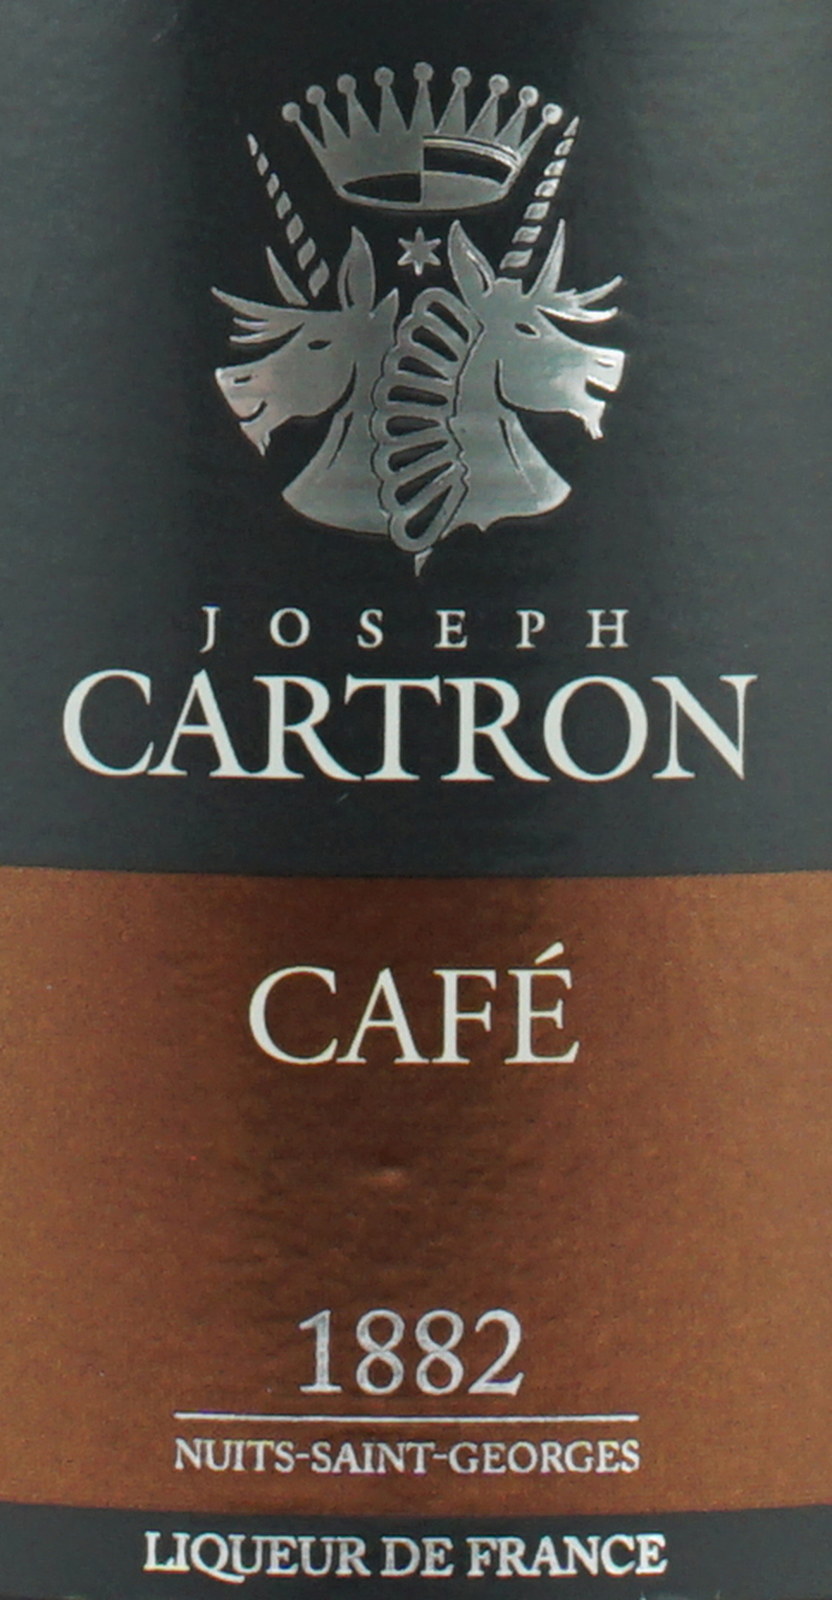 LIQUEUR DE CAFÉ JOSEPH CARTRON – Joseph Cartron